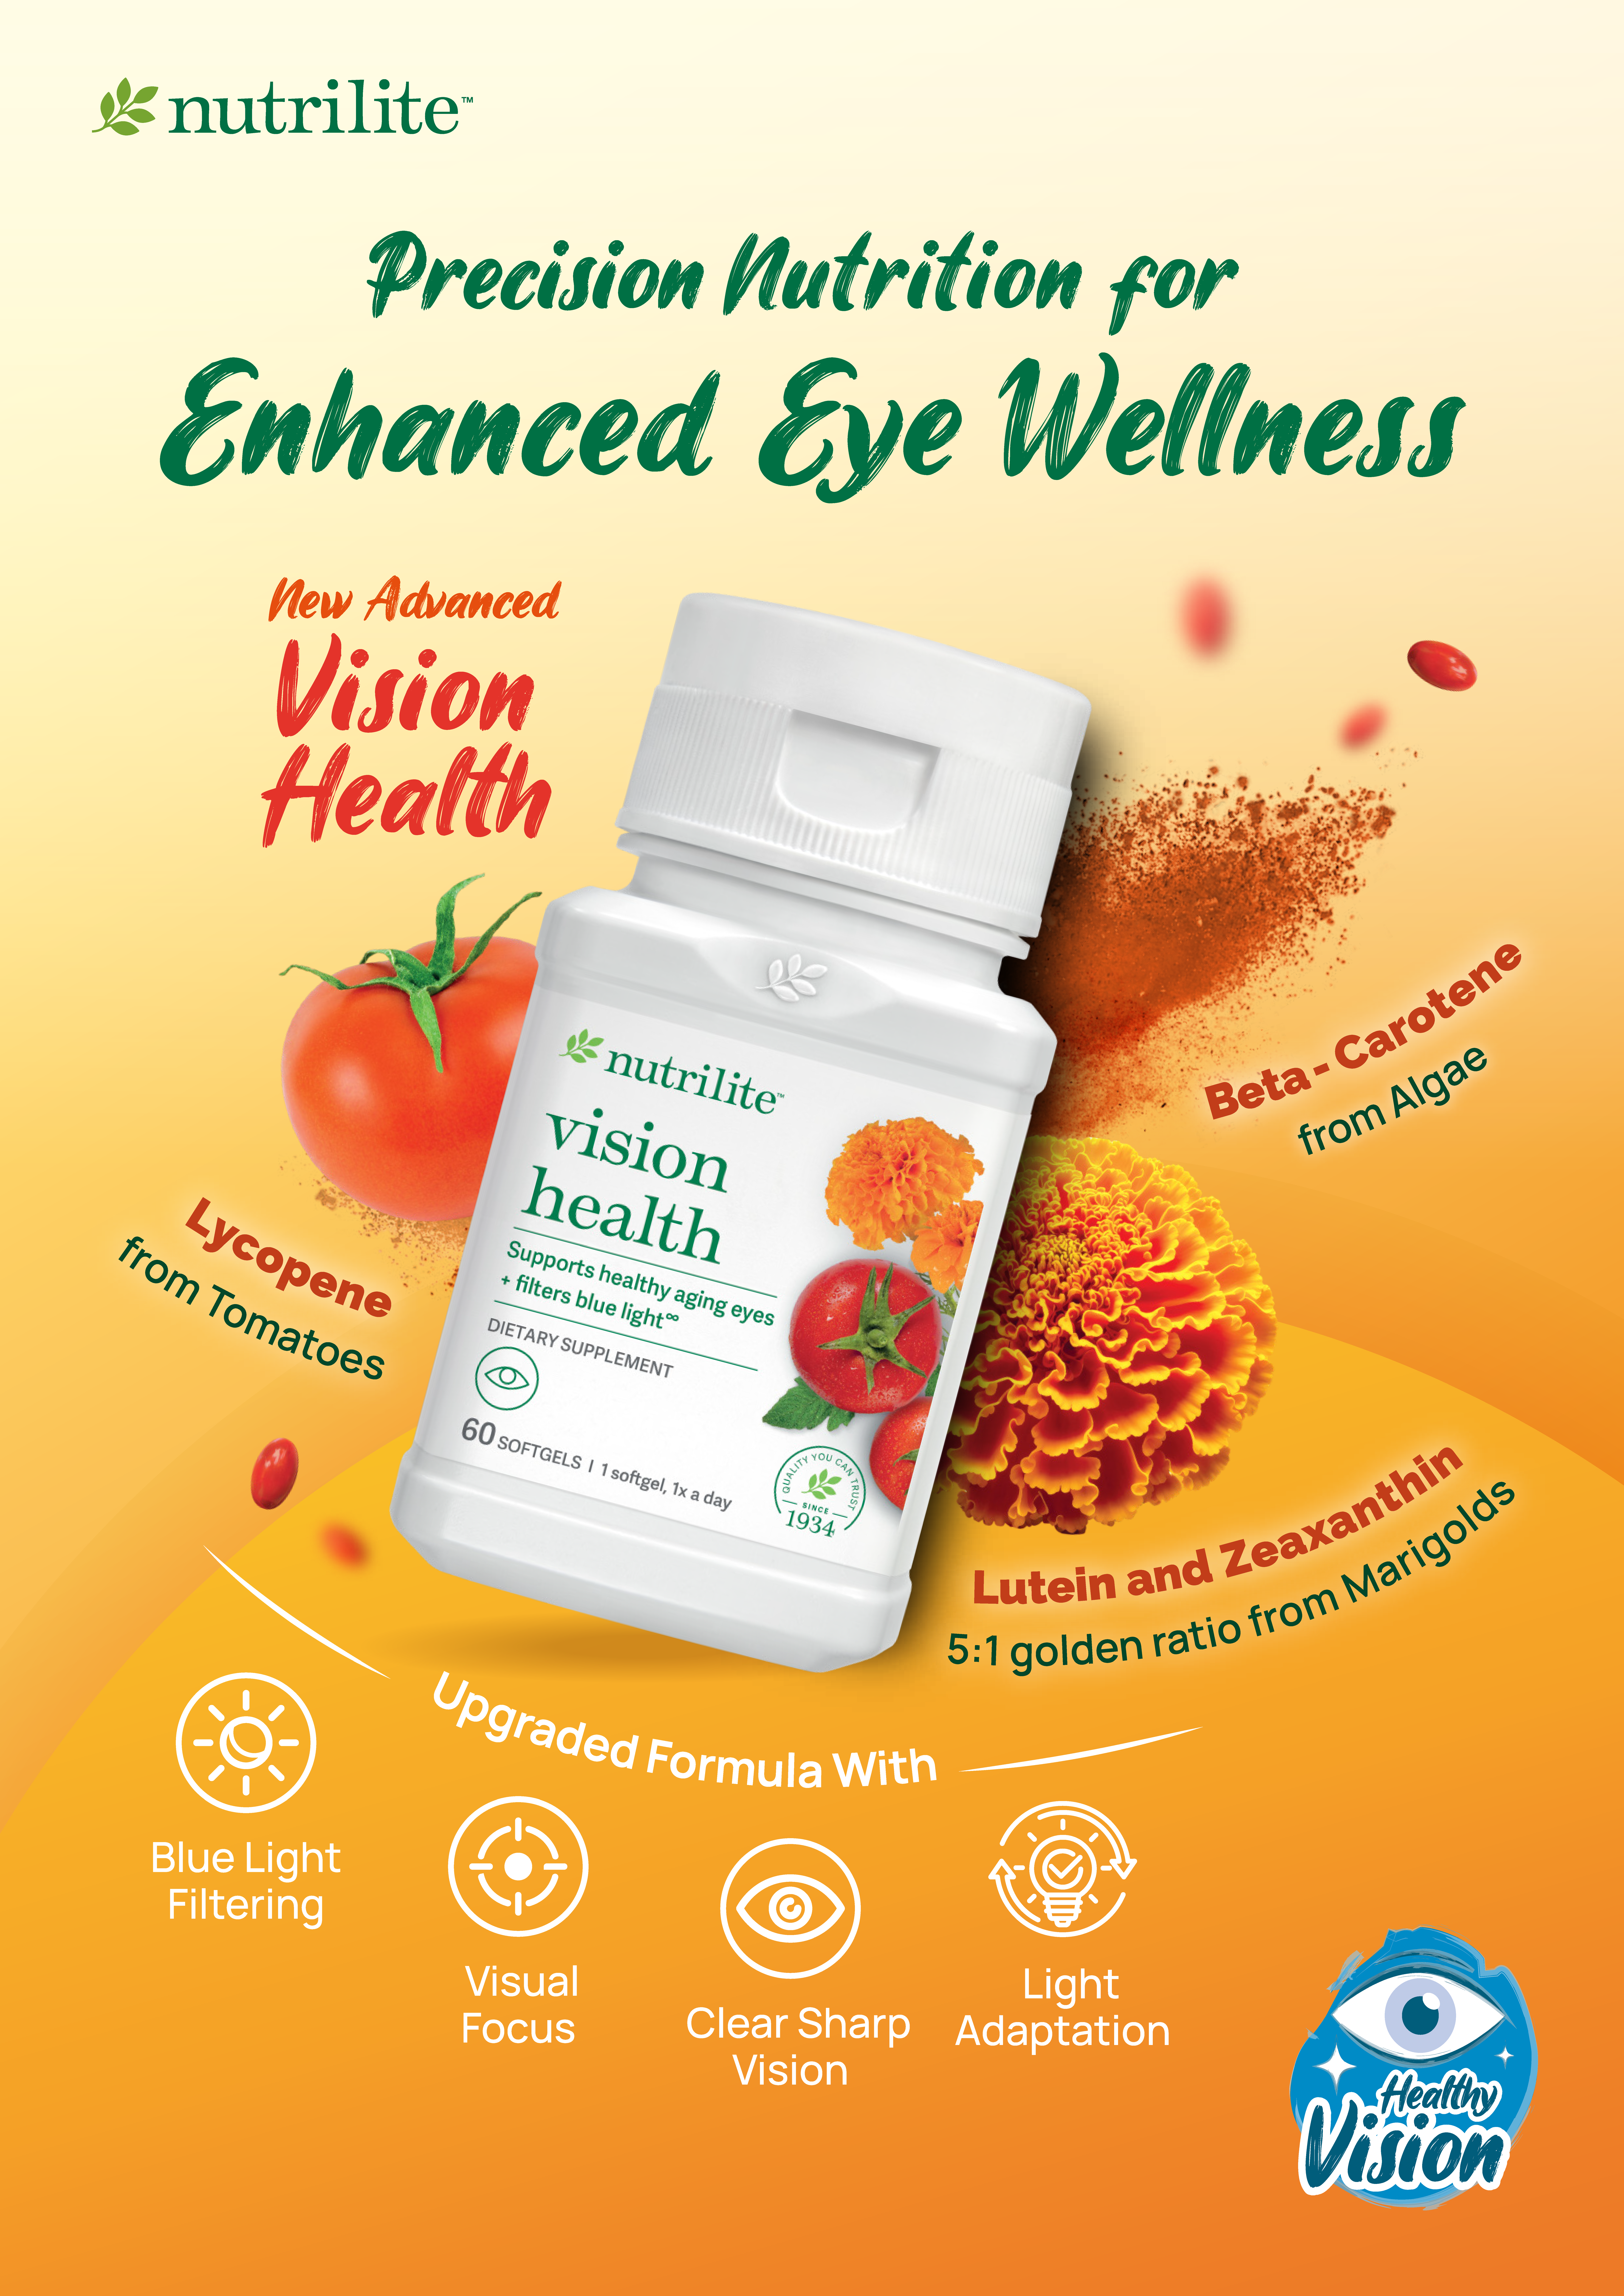 New Advanced Nutrilite Vision Health

